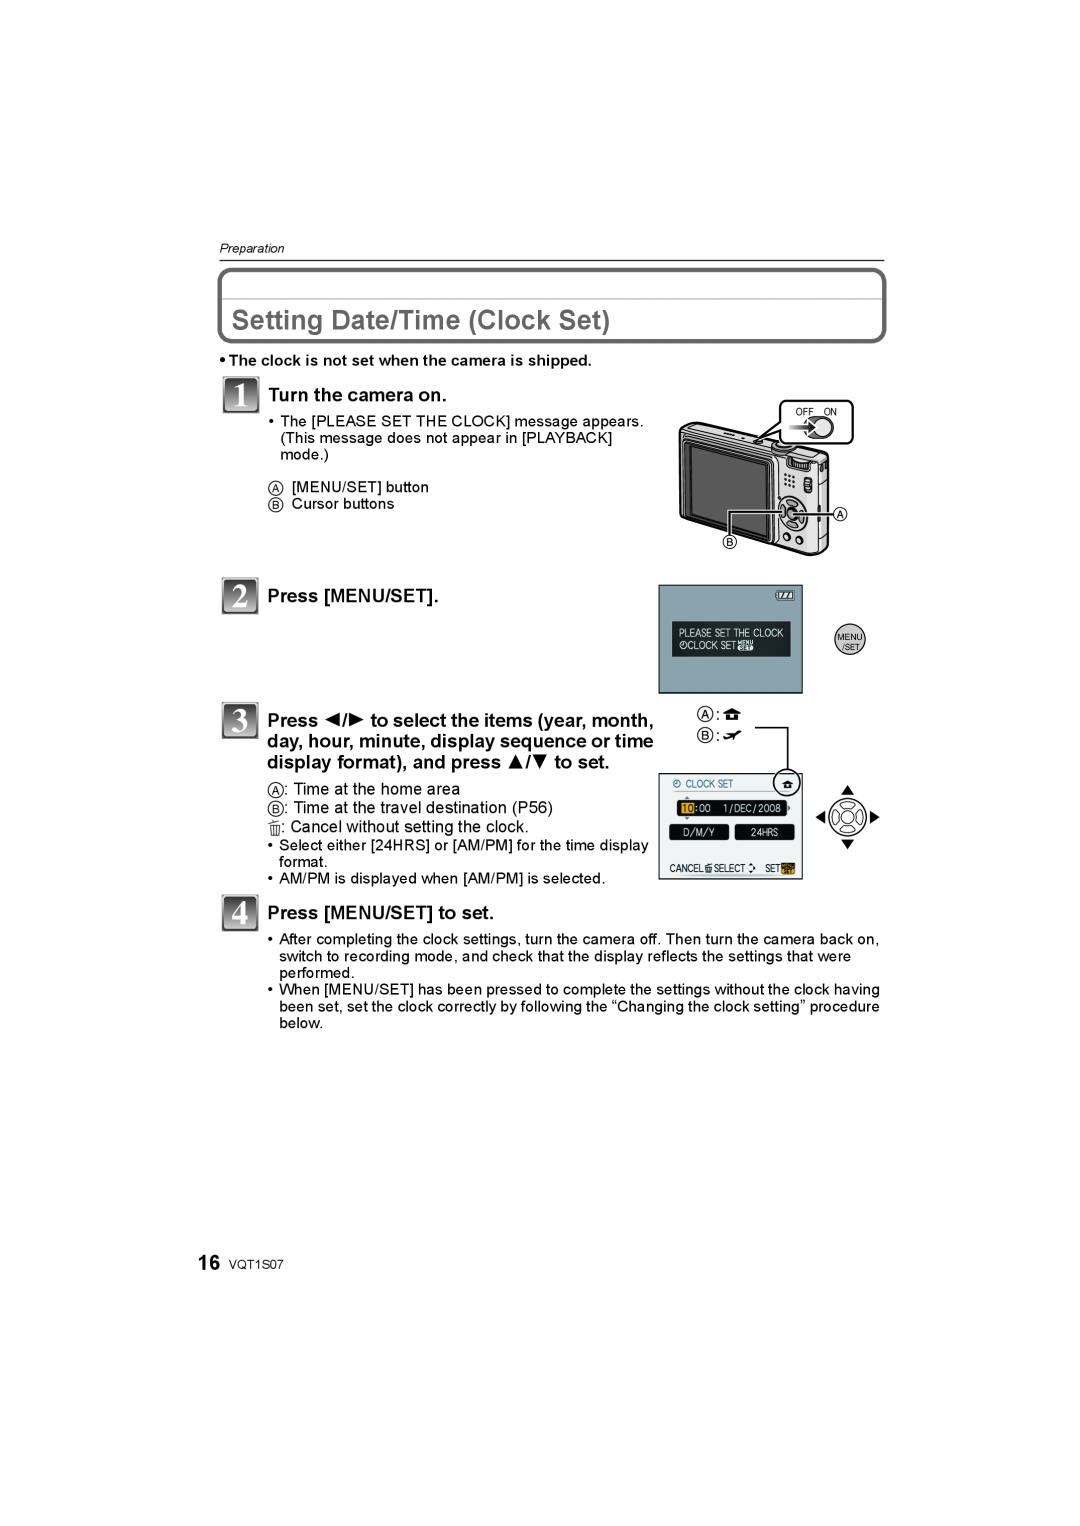 Panasonic DMC-FX38 operating instructions Setting Date/Time Clock Set, Turn the camera on, Press MENU/SET to set 